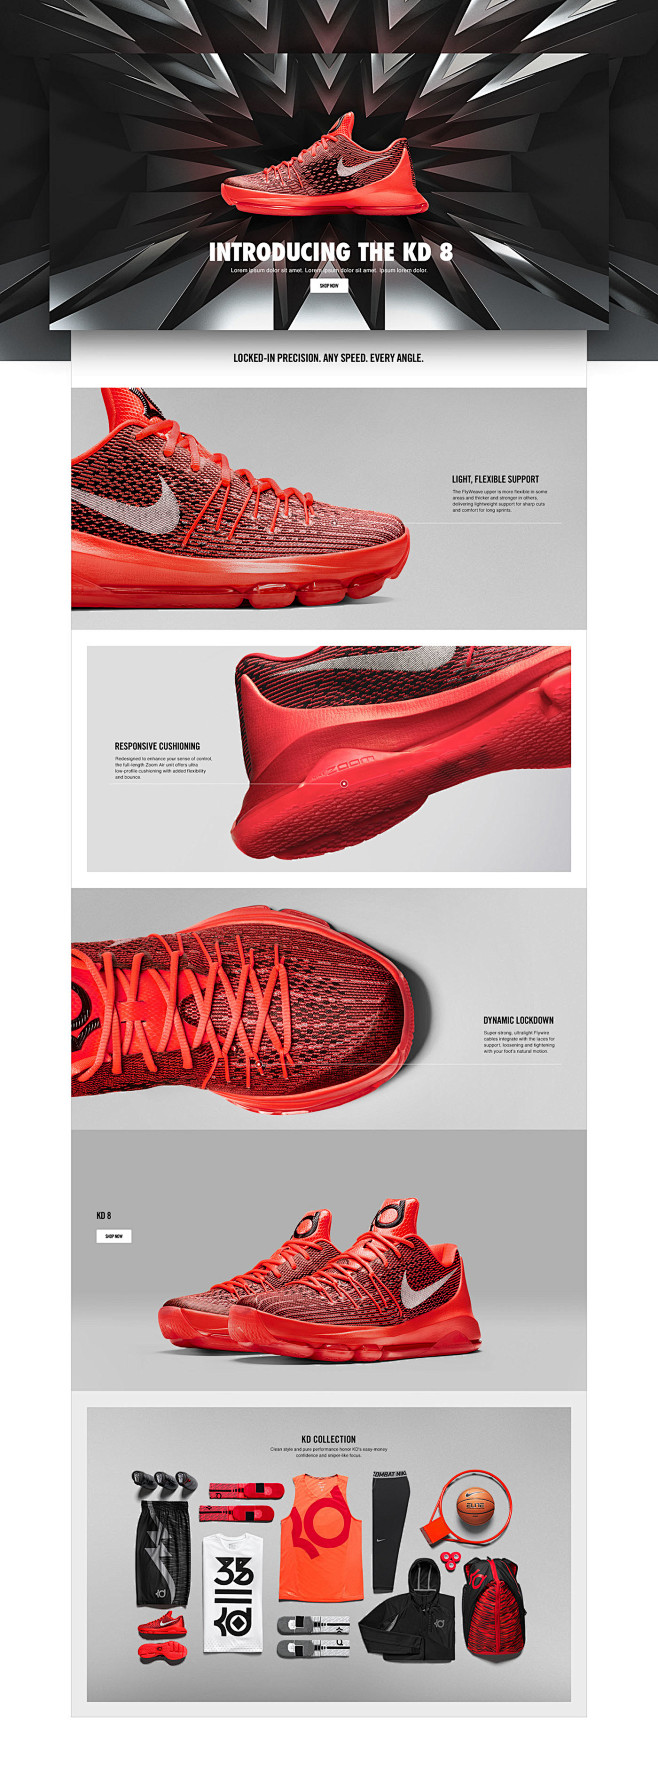 Nike.com product sit...